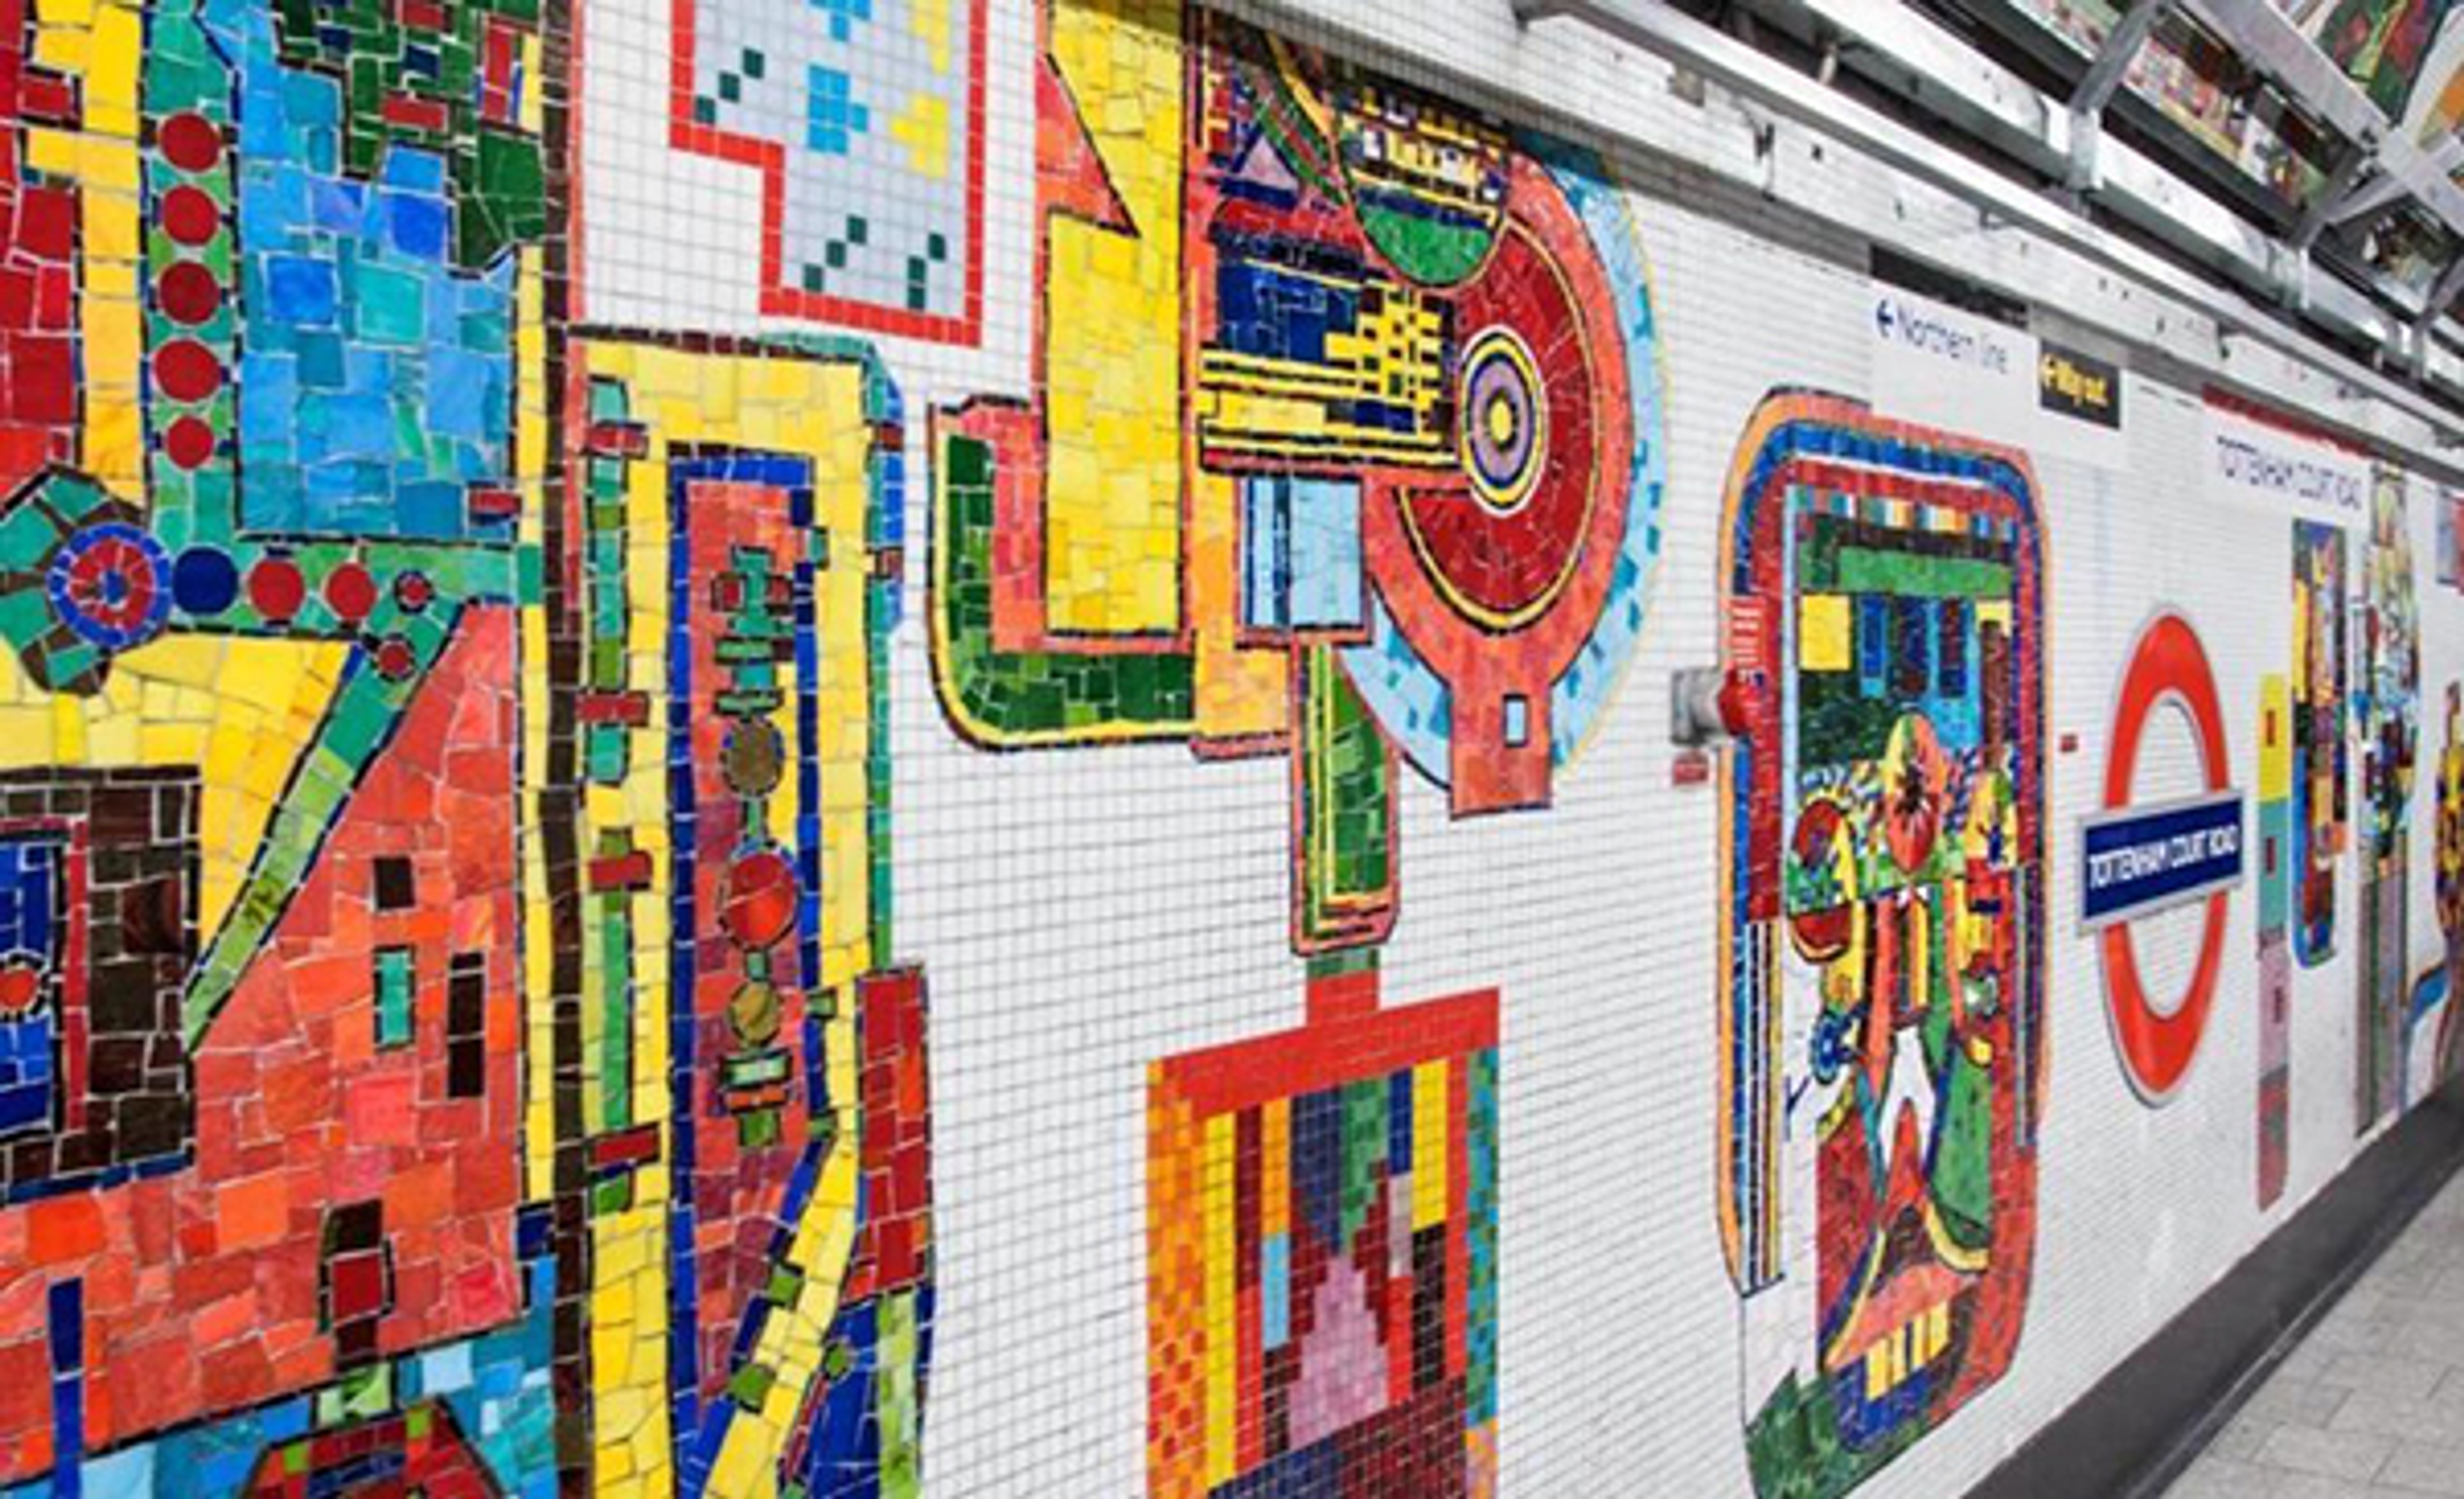 photo of Paolozzi's work featured on the London Underground